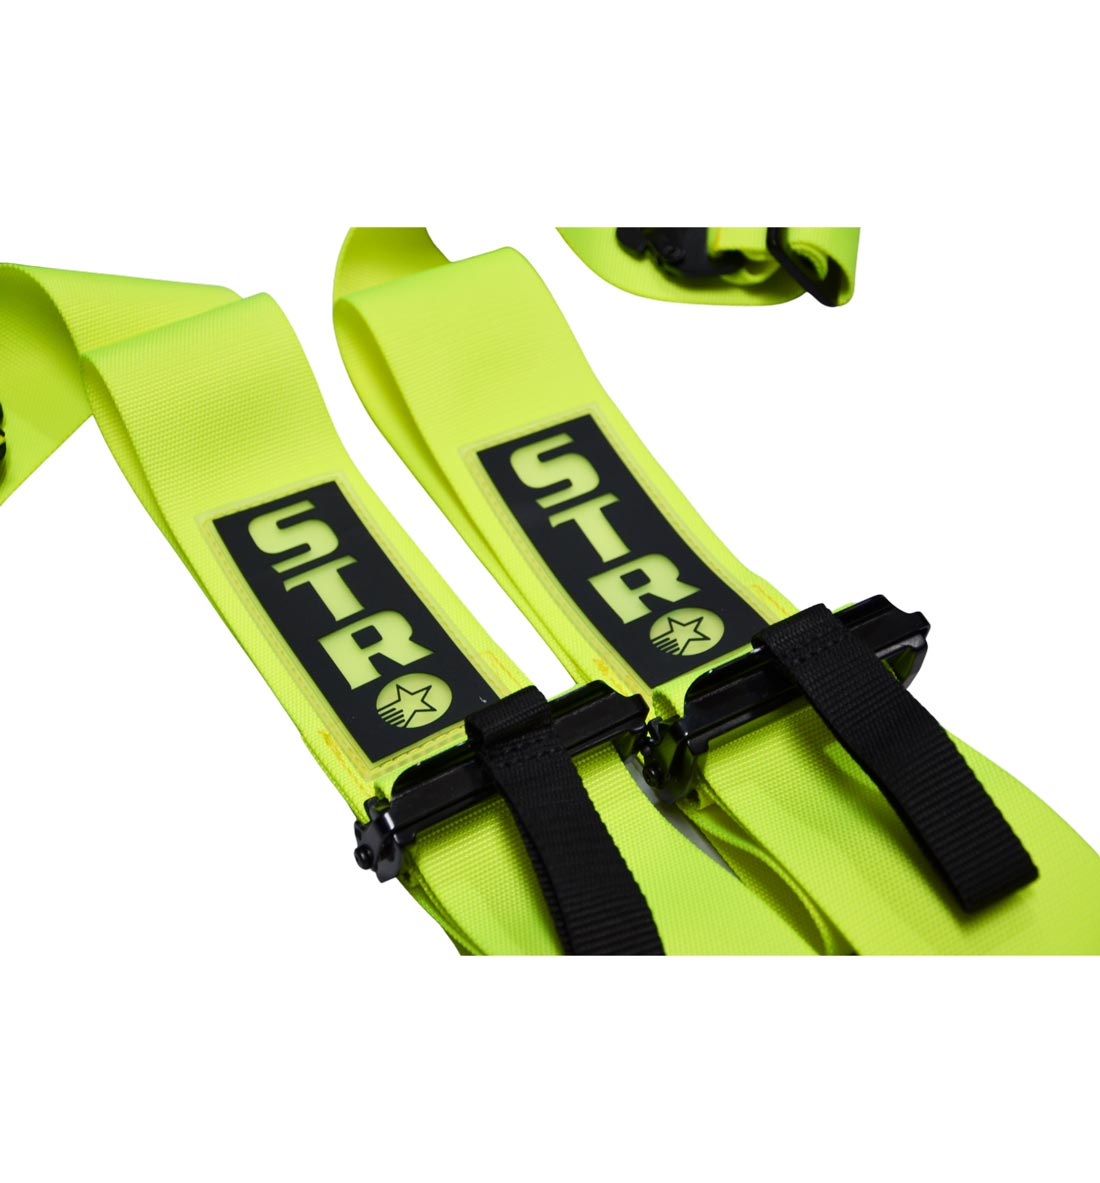 STR 5-Point Lightweight NASCAR Latch Race Harness - Yellow Fluo